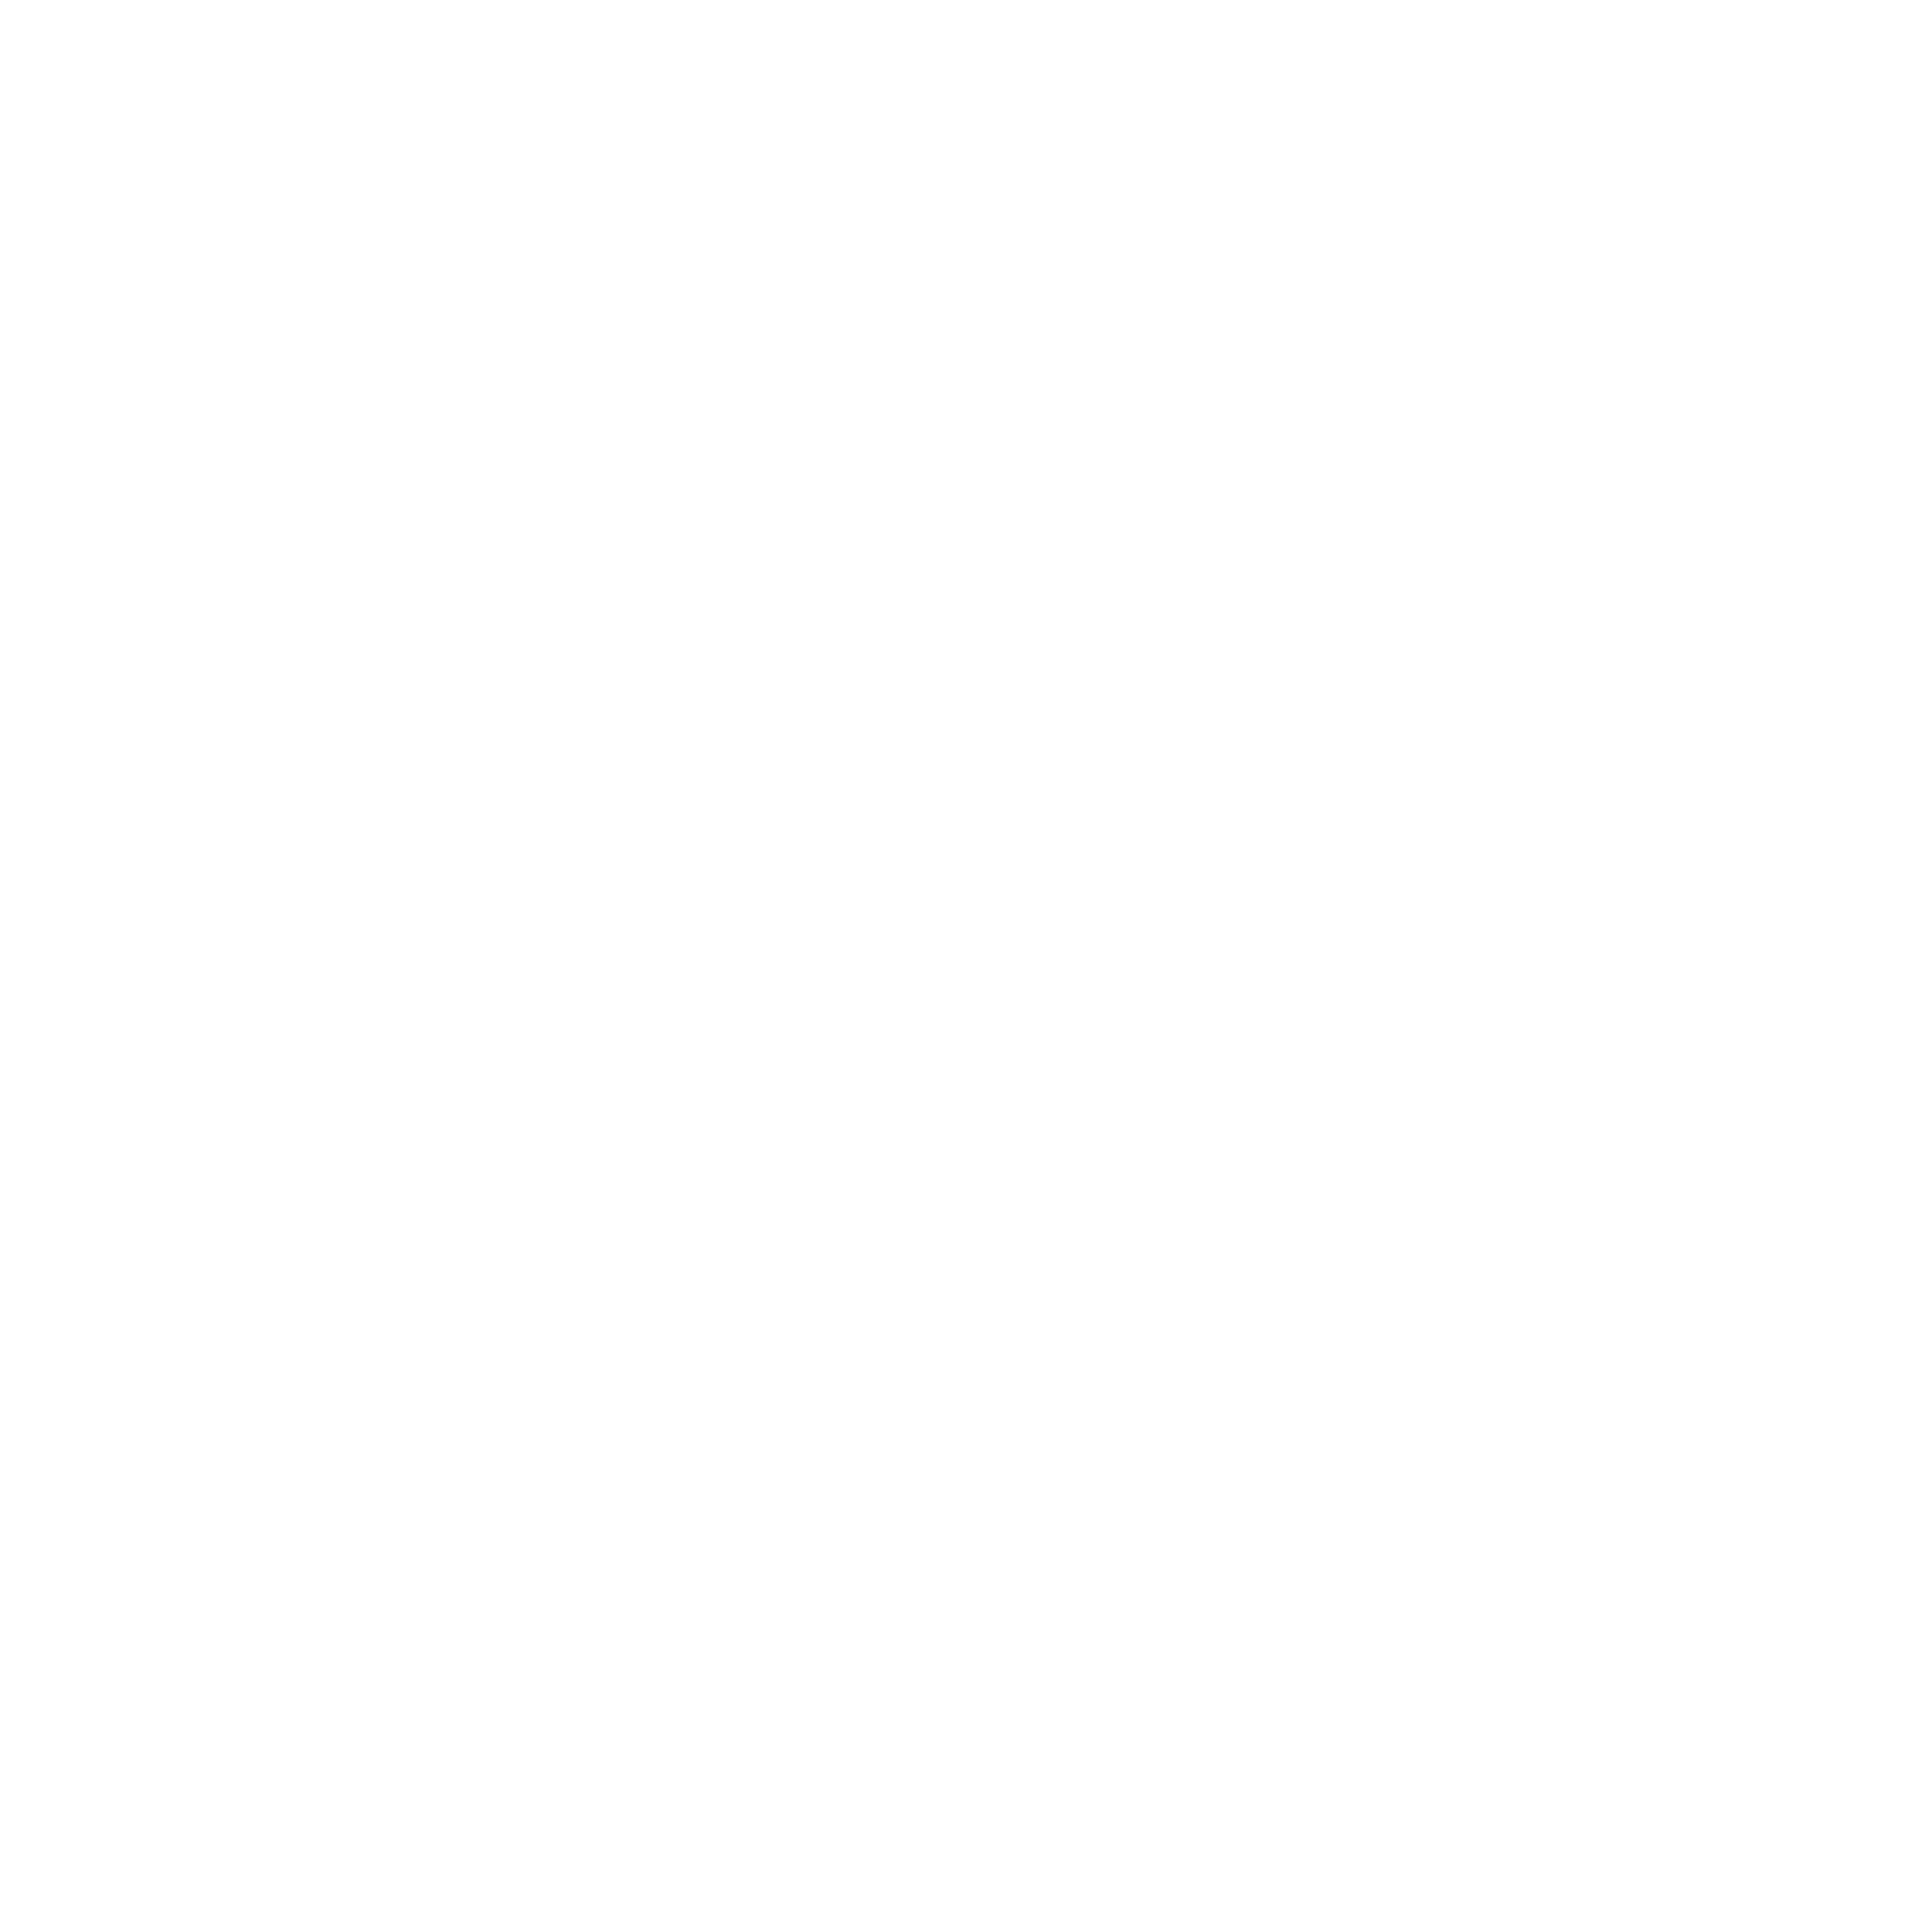 Axel Schoenert Architectes